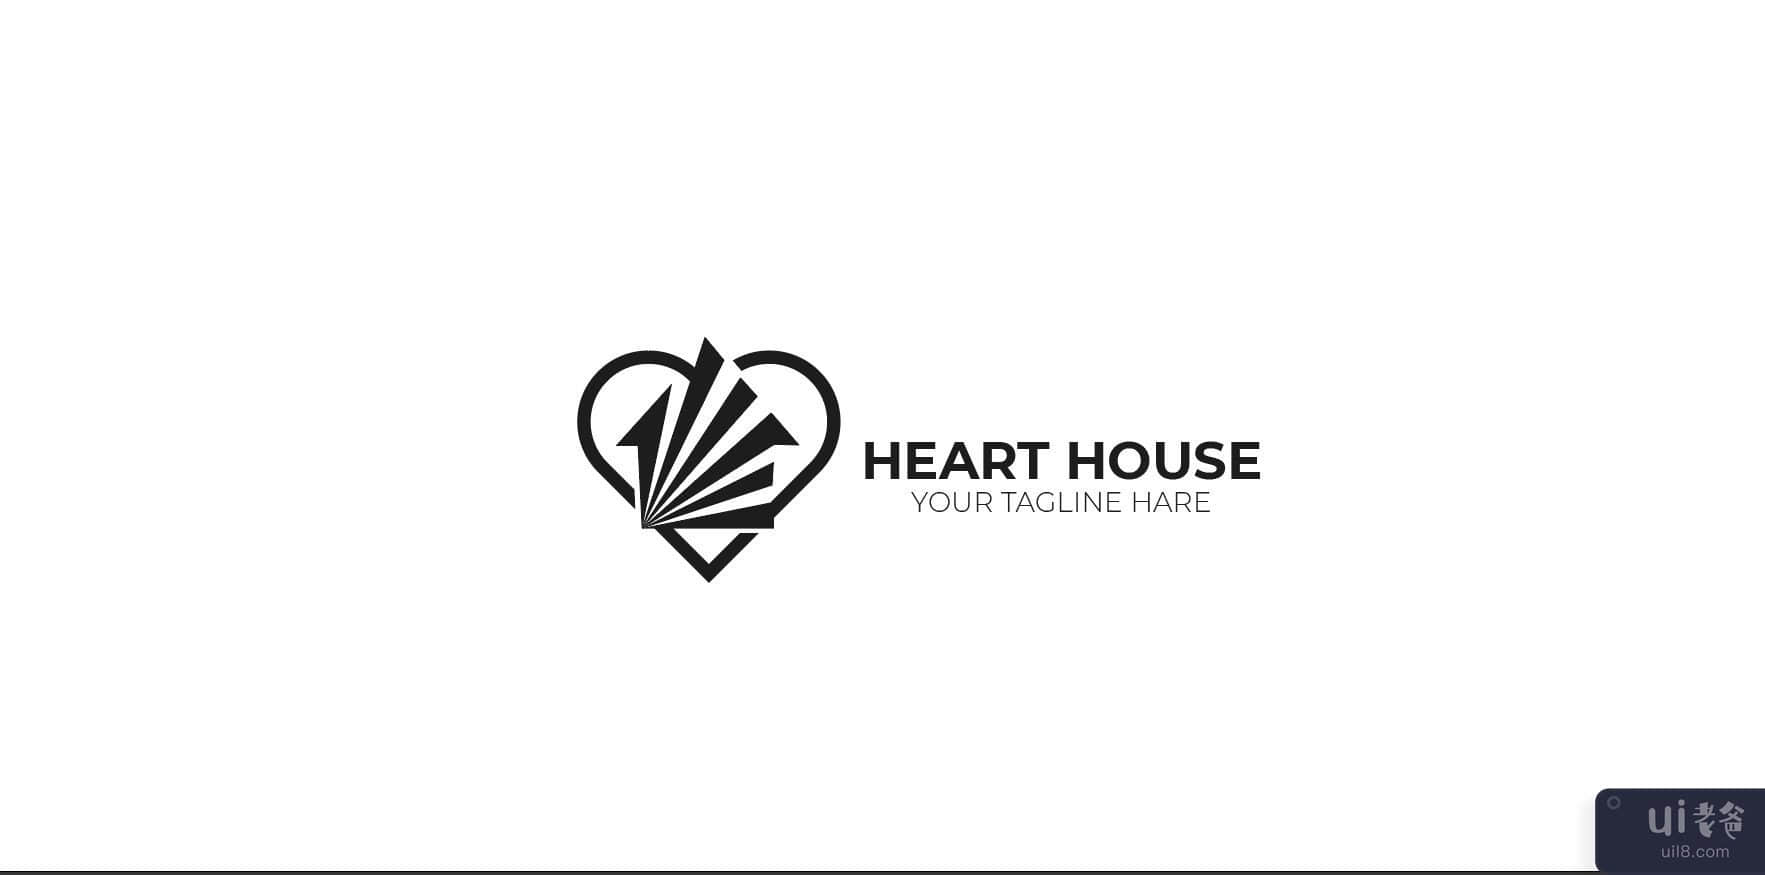 心之家徽标(Heart House logo)插图